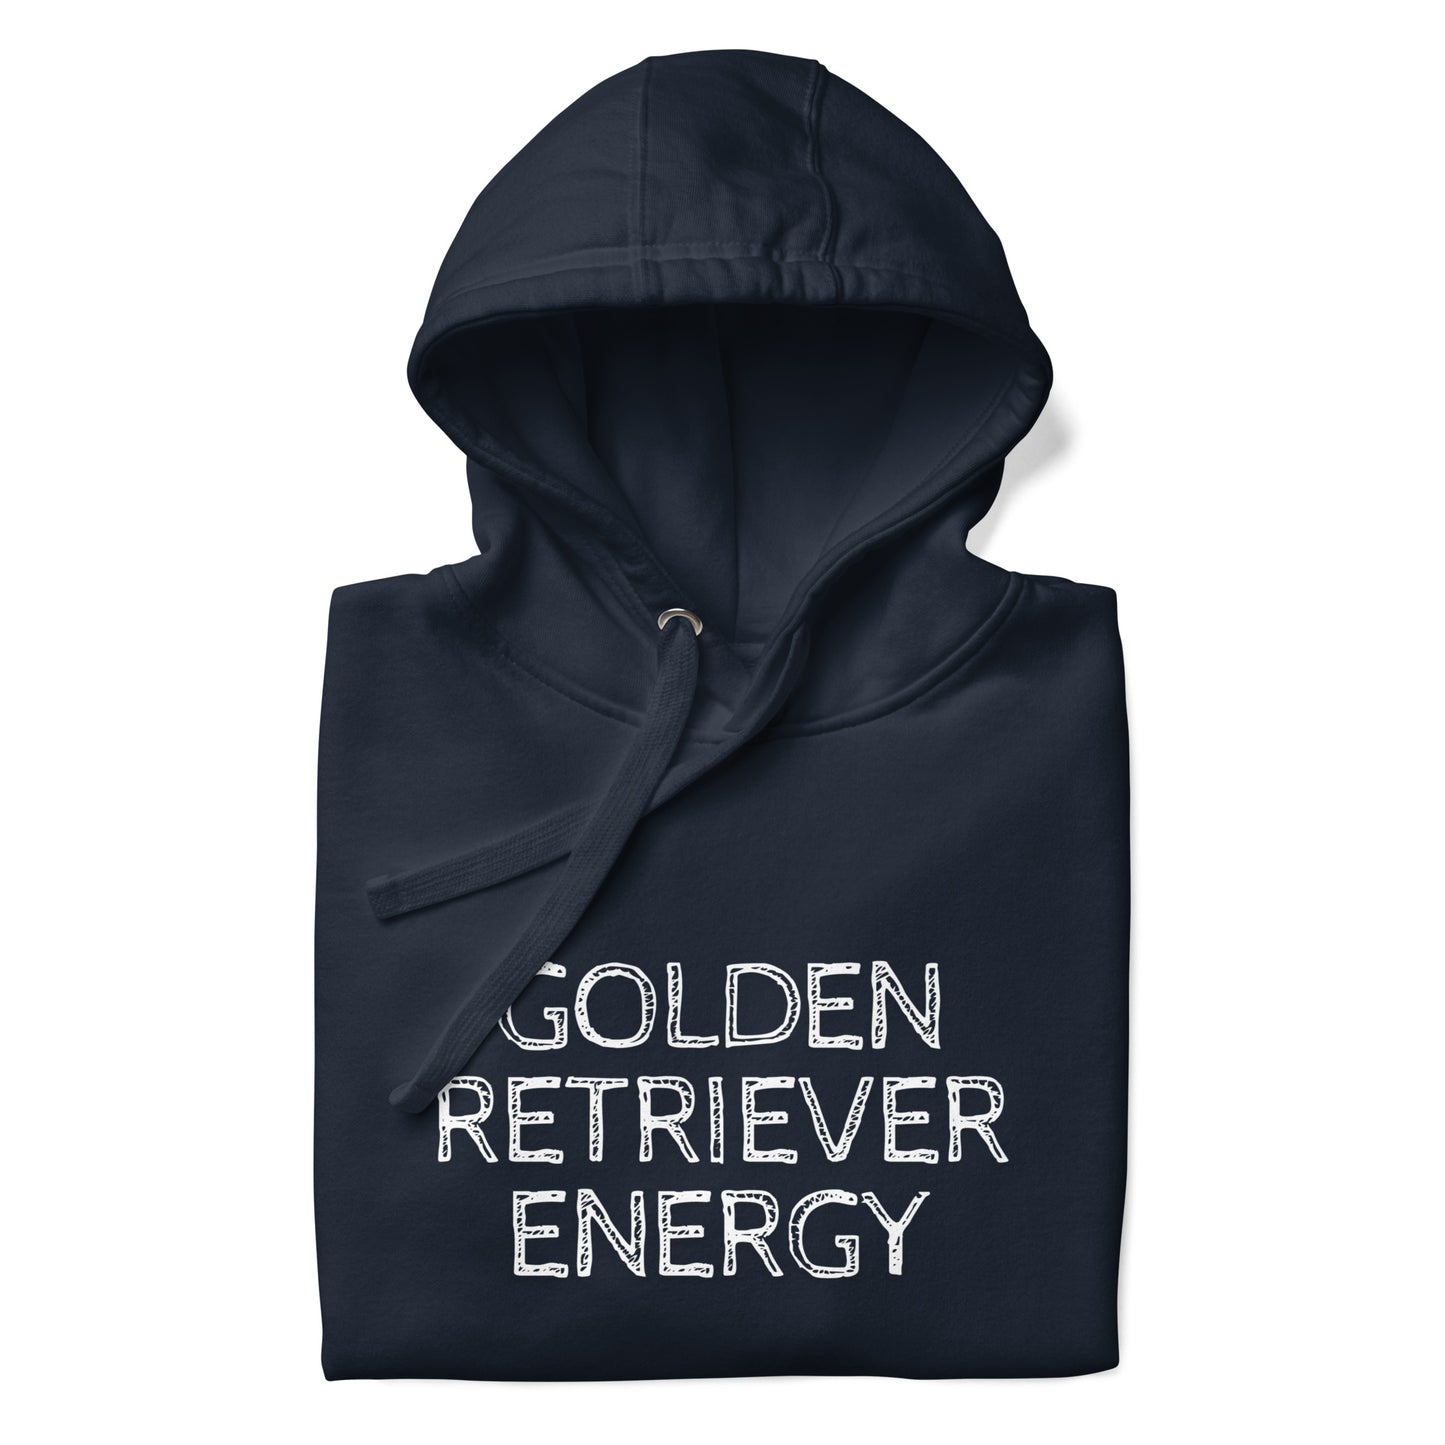 Golden Retriever Energy - Hoodie